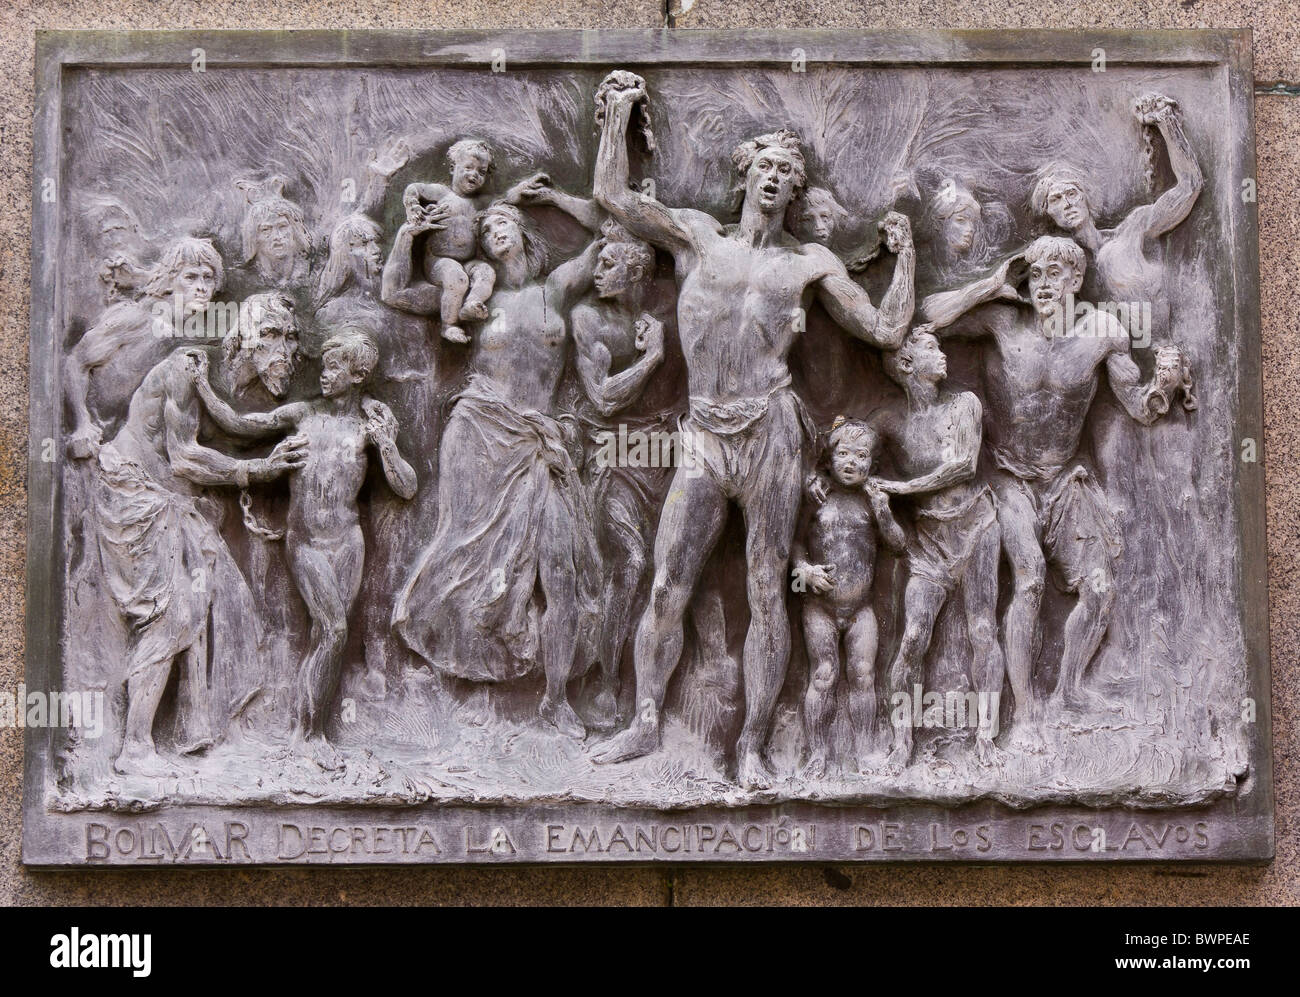 PANAMA CITY, PANAMA - Relief Skulptur von Simon Bolivar Freigabe Sklaven, Plaza Bolivar in Casco Viejo, historische Stockfoto